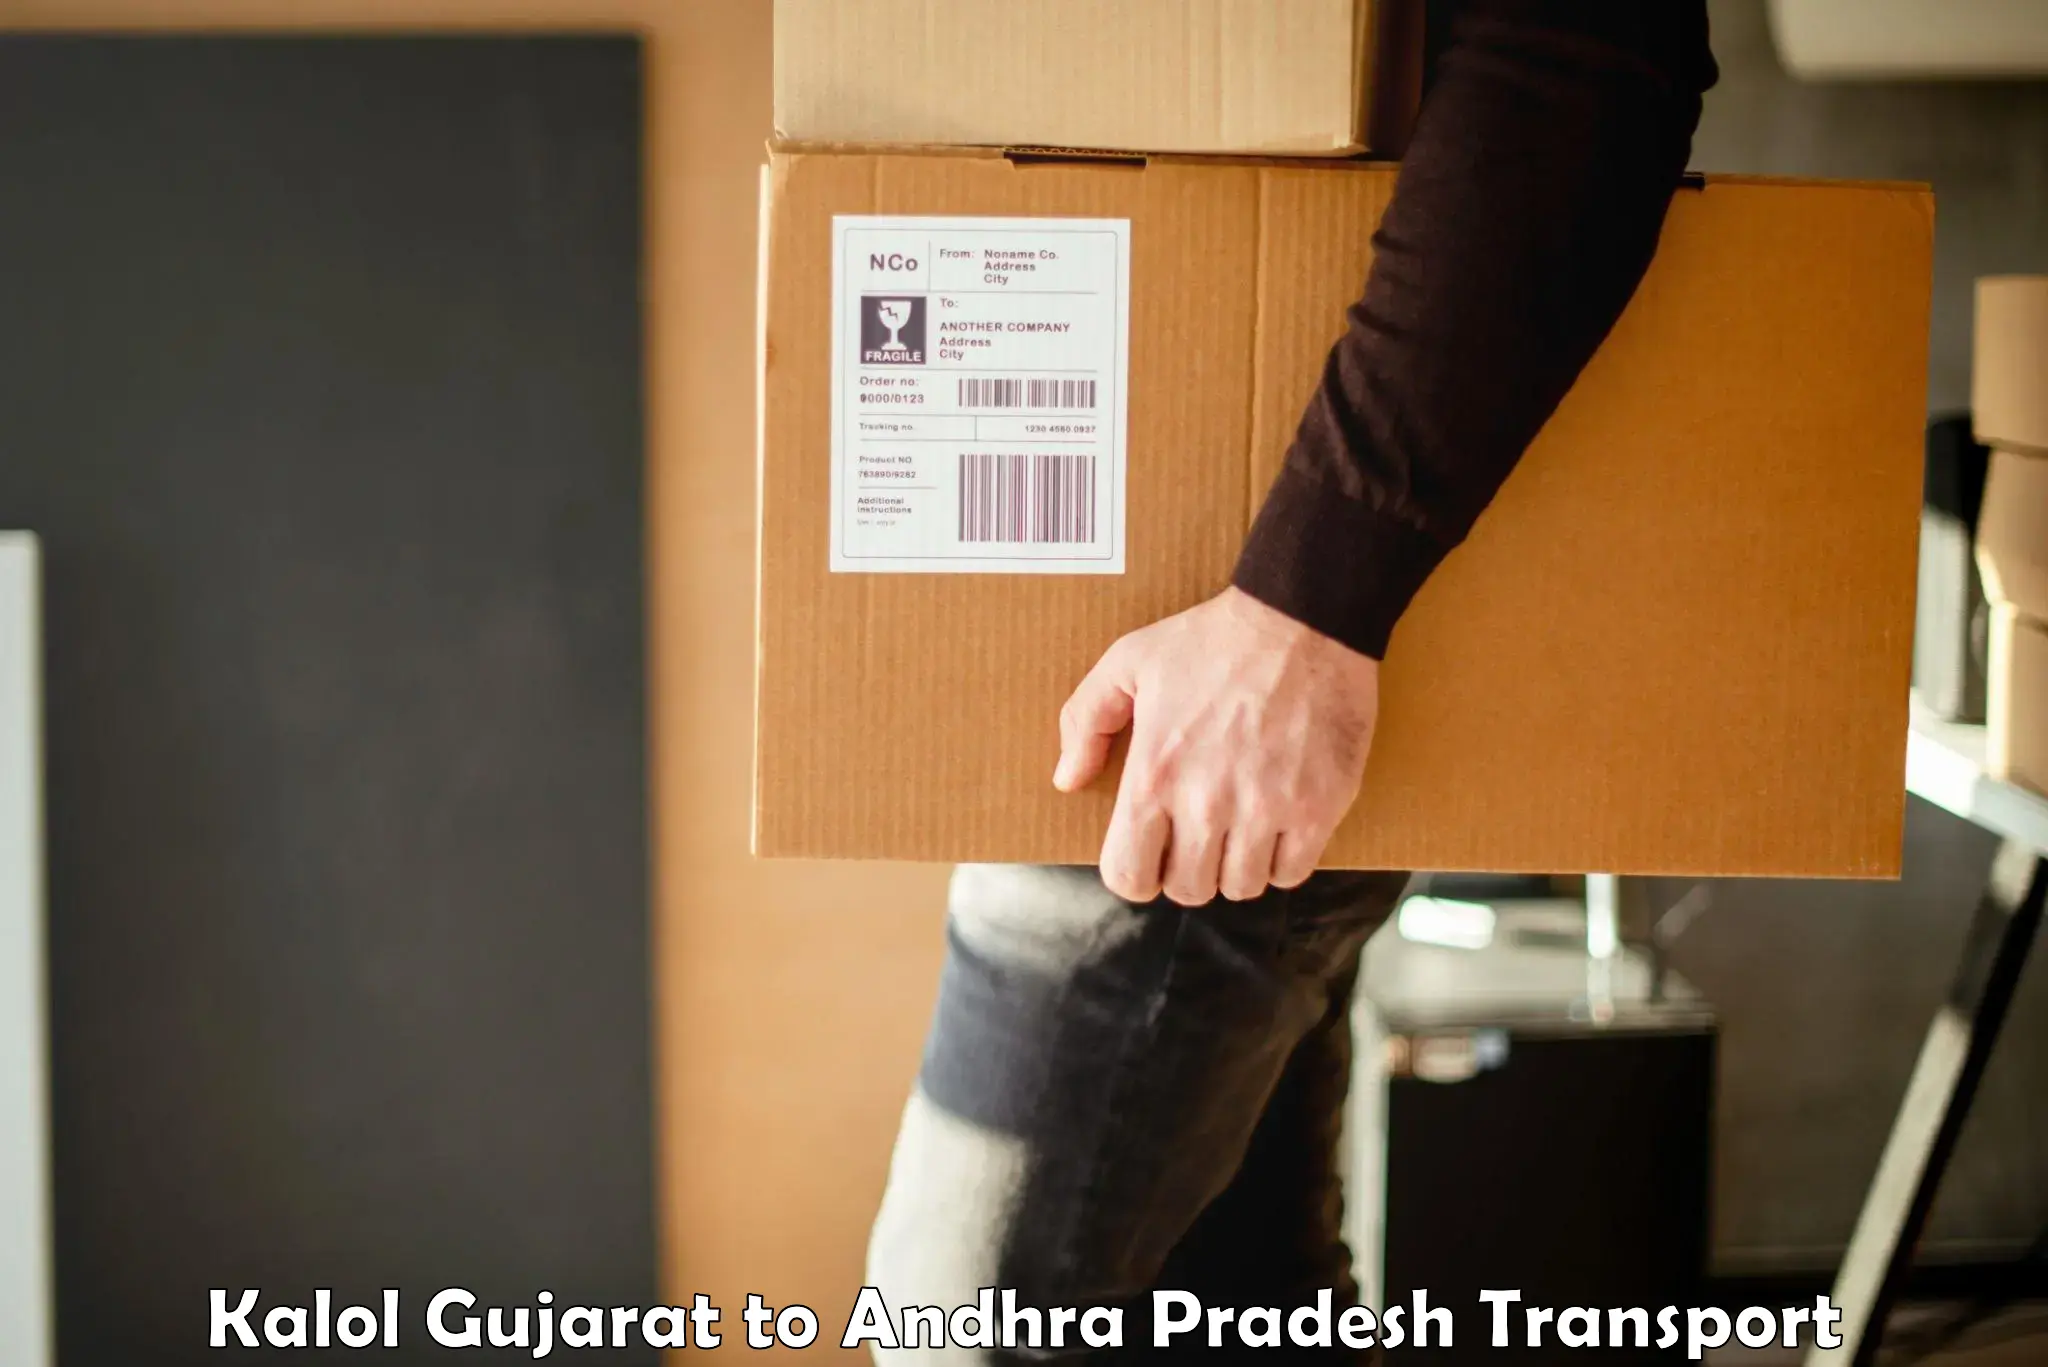 Transport in sharing Kalol Gujarat to Chandragiri